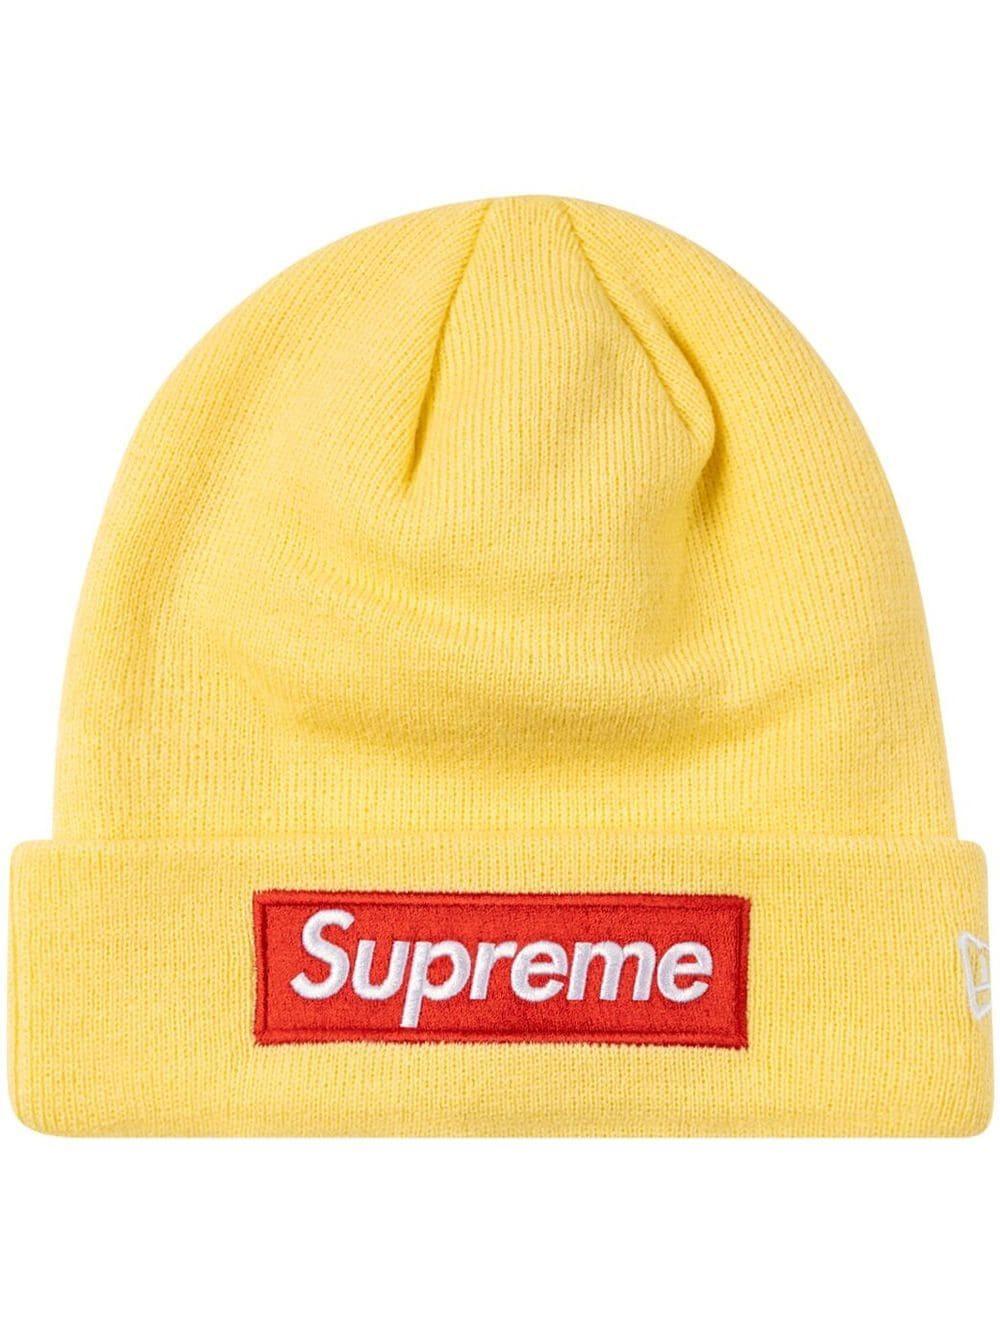 Supreme X New Era Box Logo Beanie in Yellow | Lyst